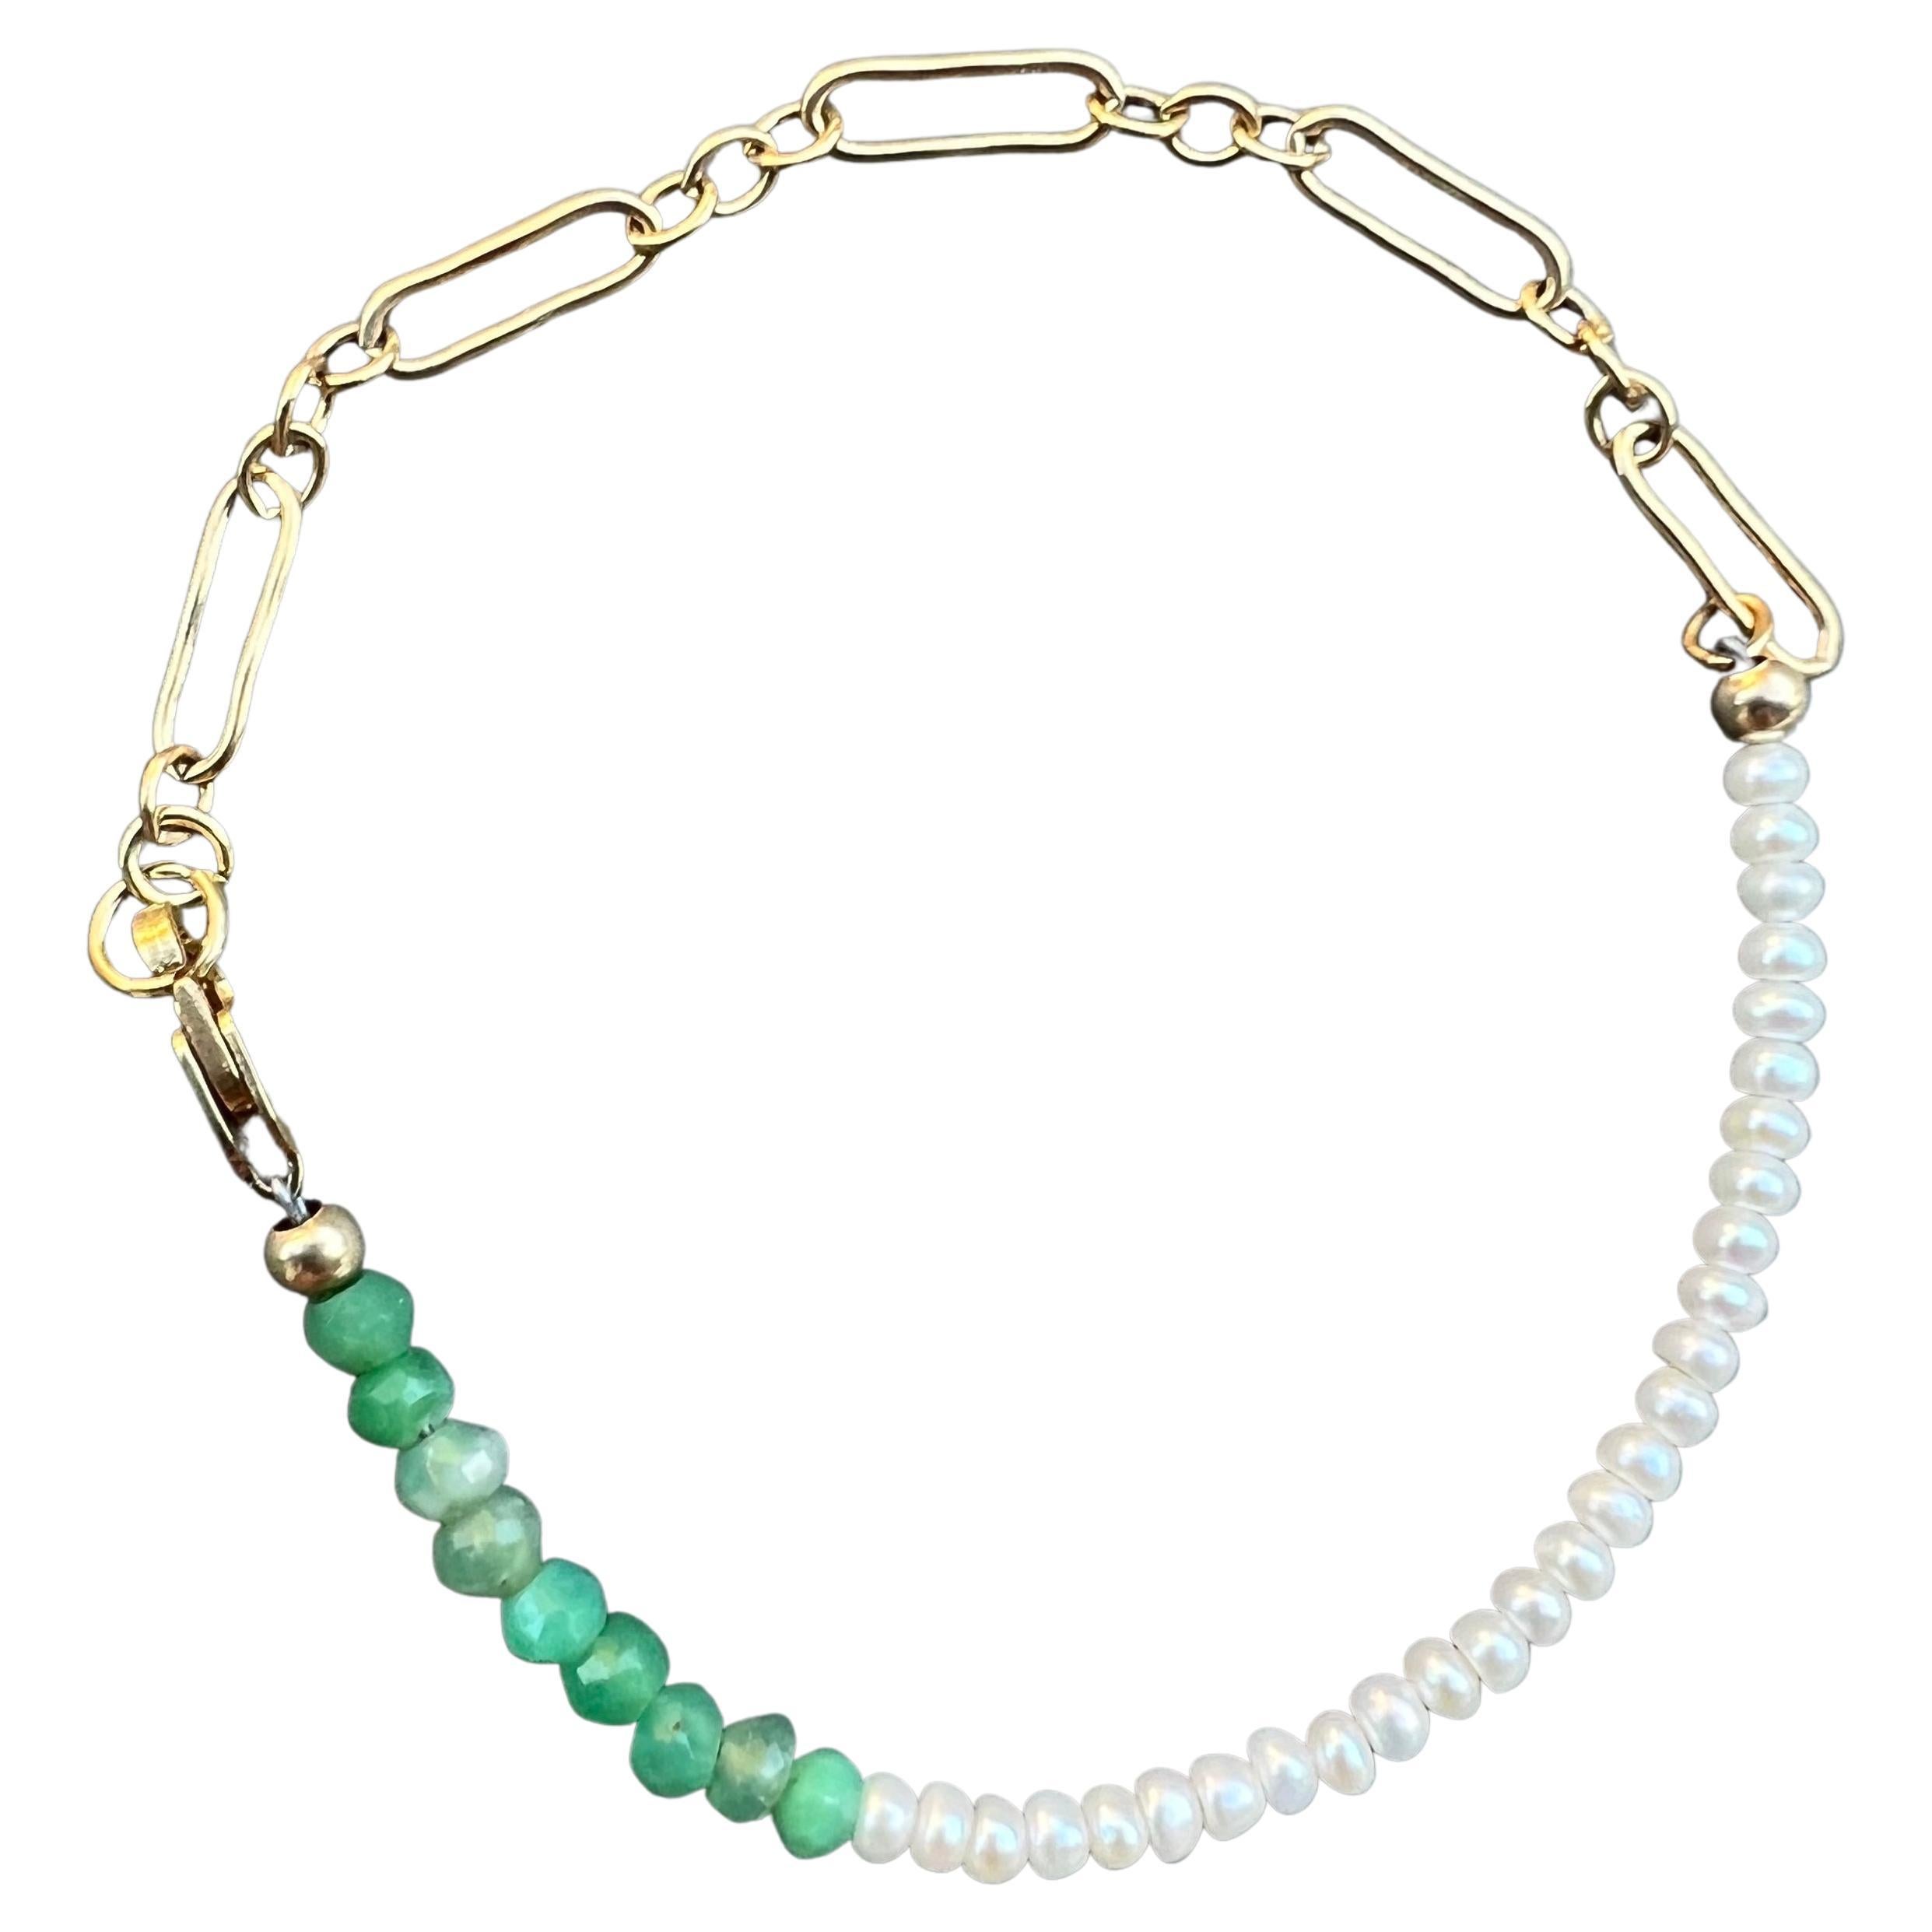 Weißes Perlenkettenarmband Grünes Chrysopras Gold gefüllt J Dauphin im Angebot